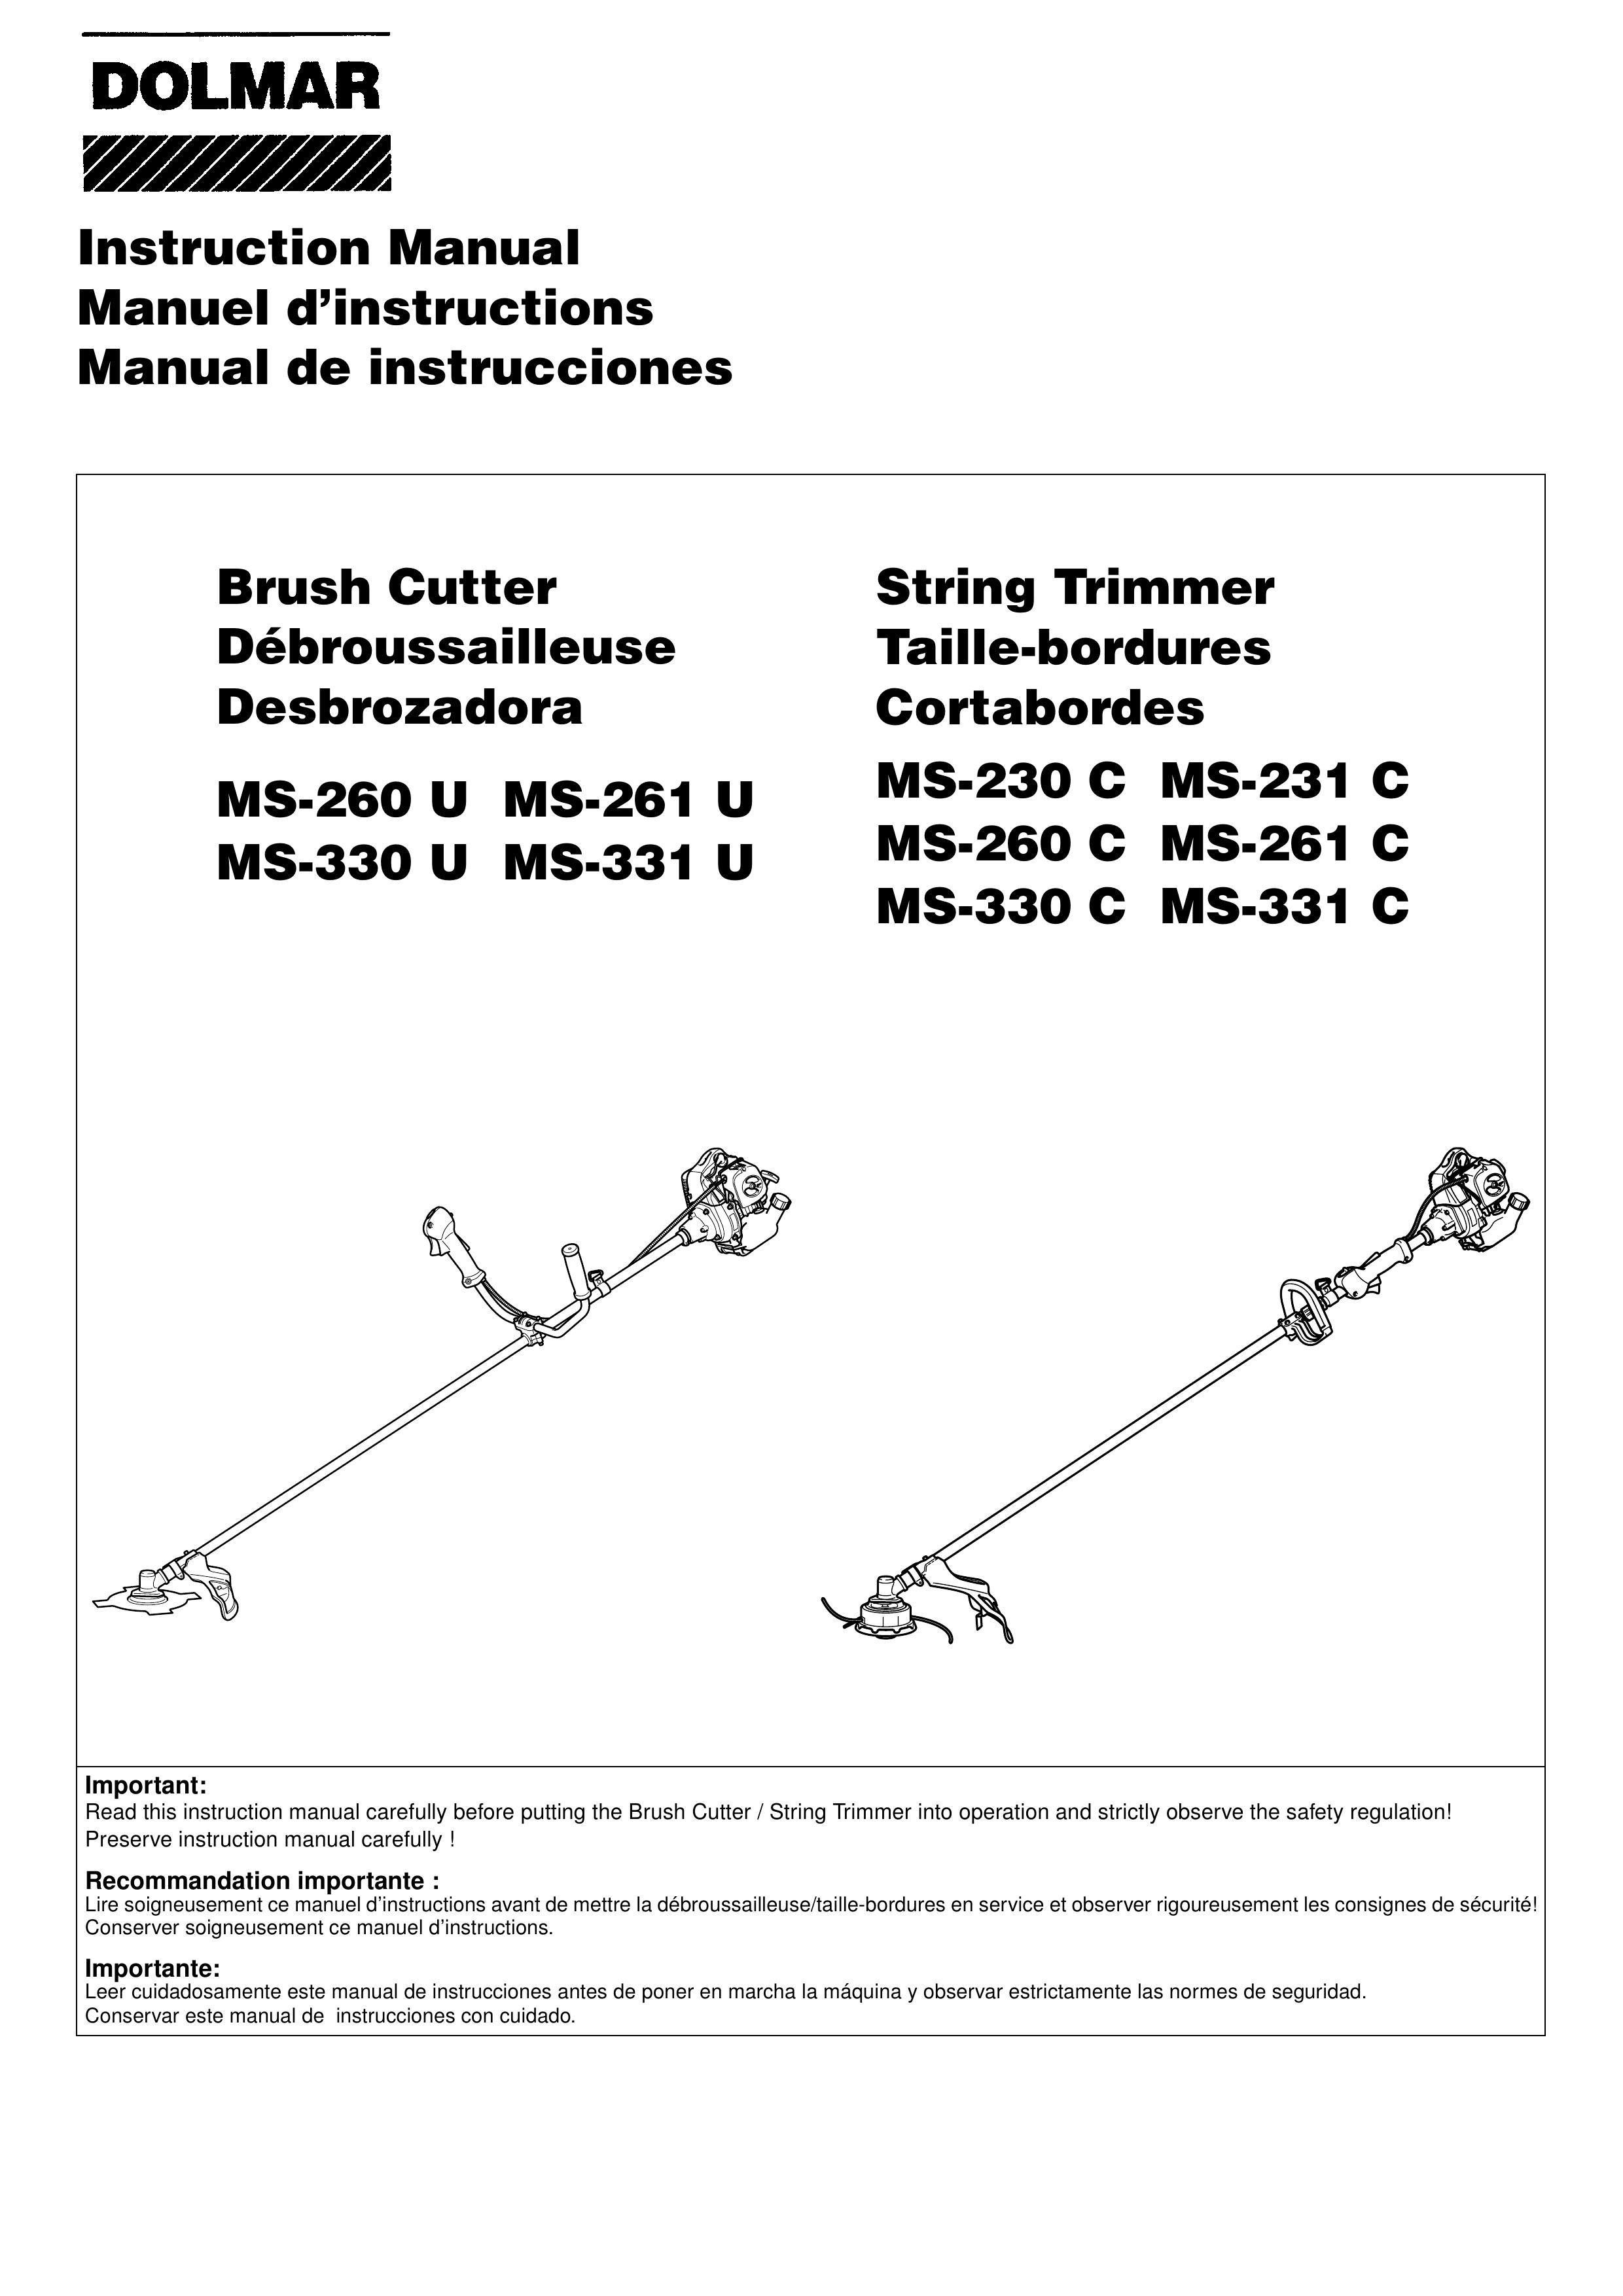 Dolmar MS-260 C Brush Cutter User Manual